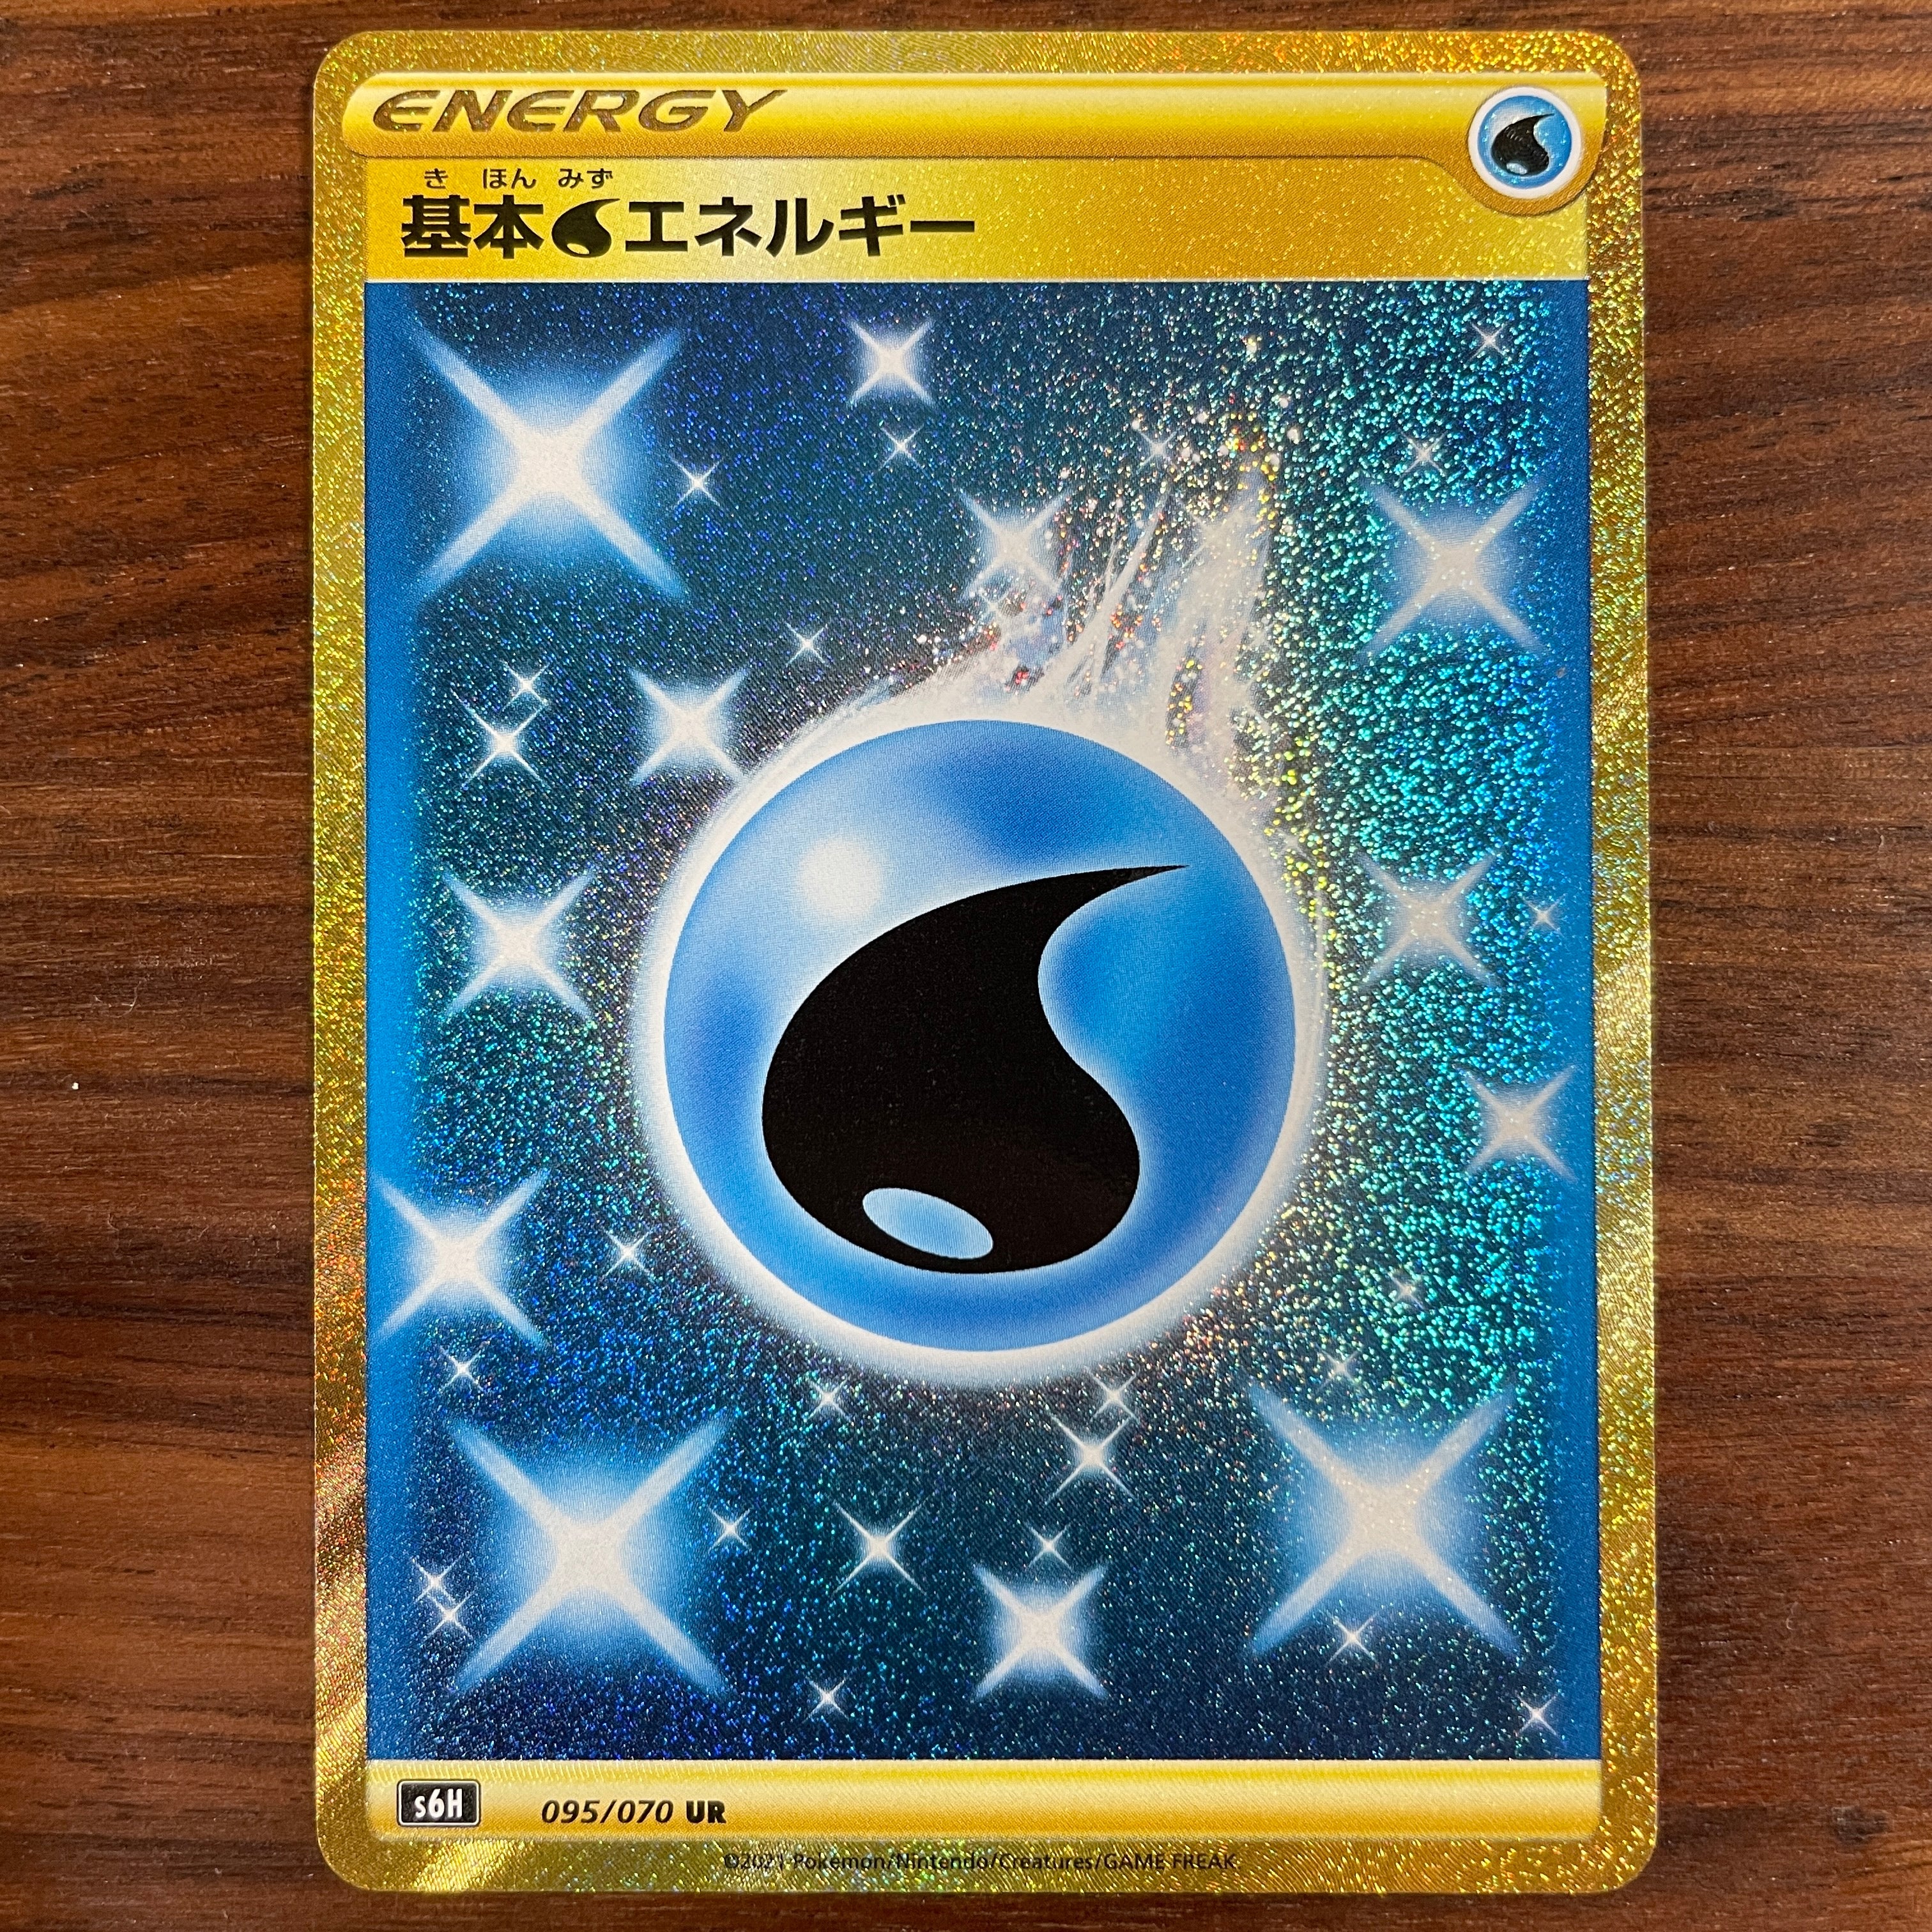 POKÉMON CARD GAME Sword & Shield Expansion pack ｢Silver Lance｣  POKÉMON CARD GAME S6H 095/070 Ultra Rare card  Basic Energy